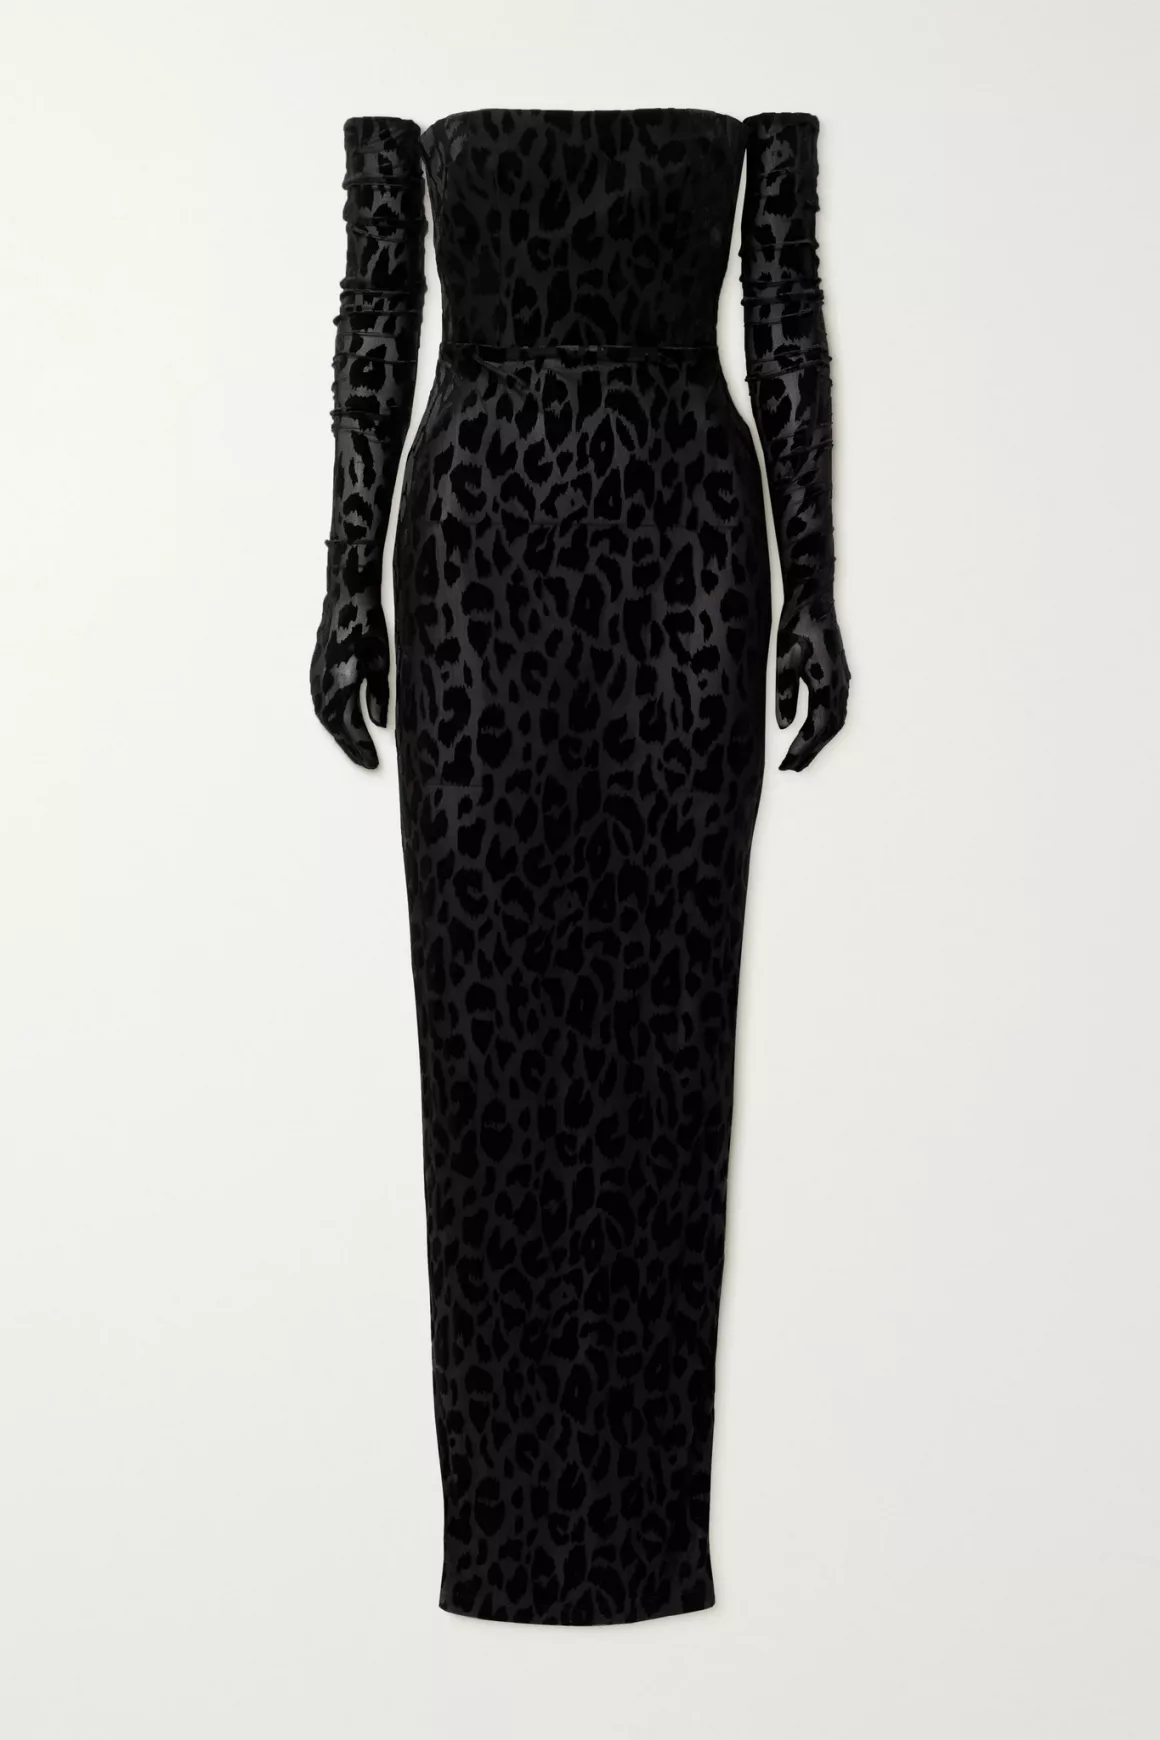 Sabrina Elba Stuns in Alex Perry Black Velvet Off Shoulder Leopard Print Dres at GQ Awards 2021 With Idris Elba2